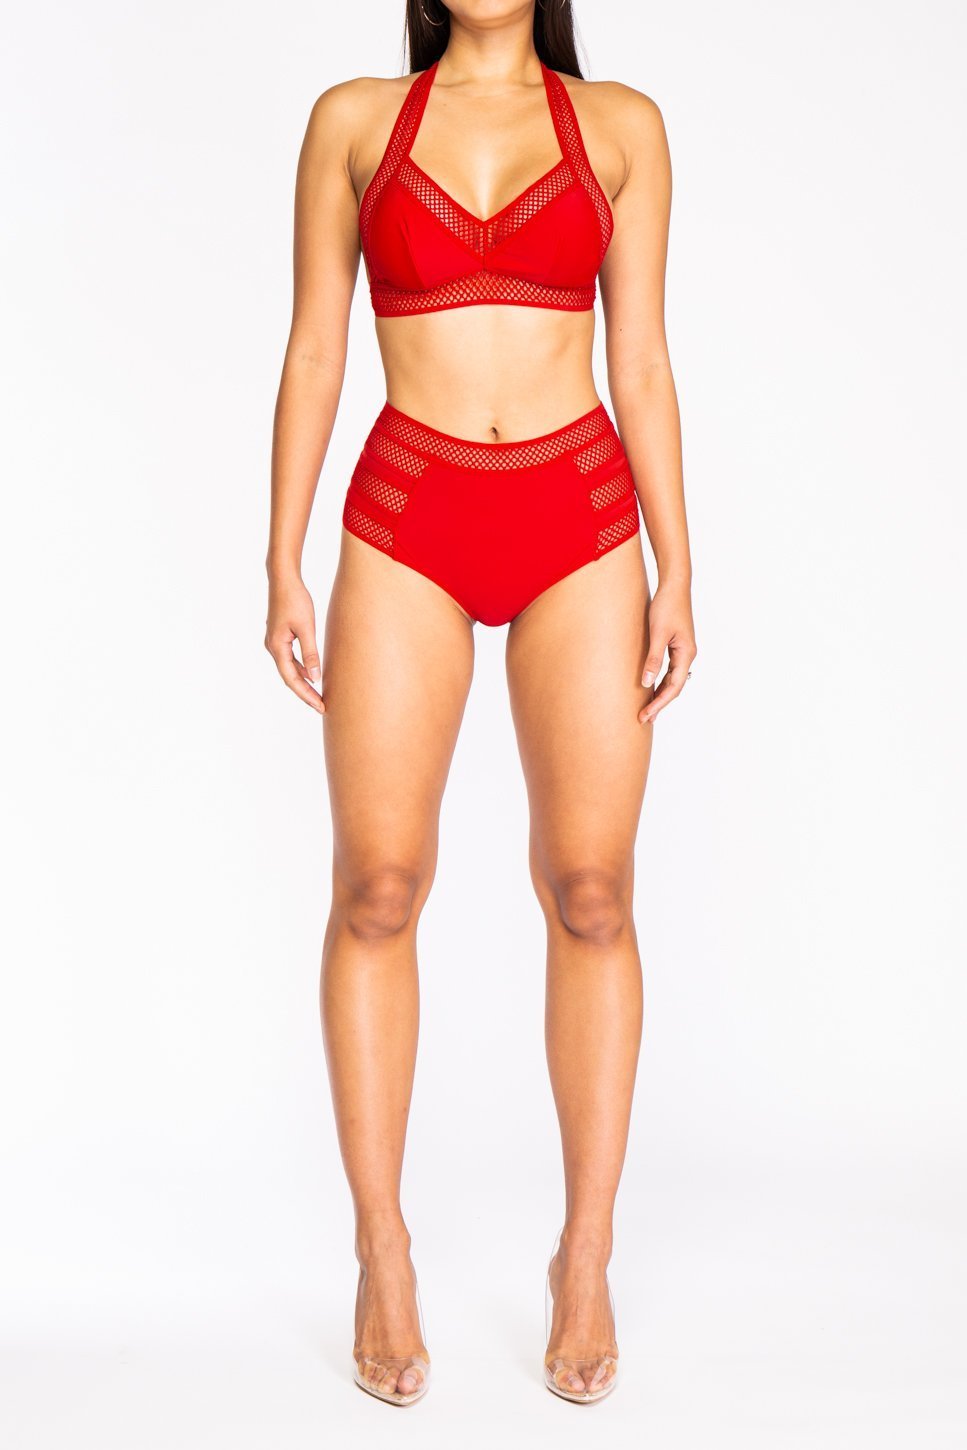 S.S High Waisted Bikini Set - SurgeStyle Boutique